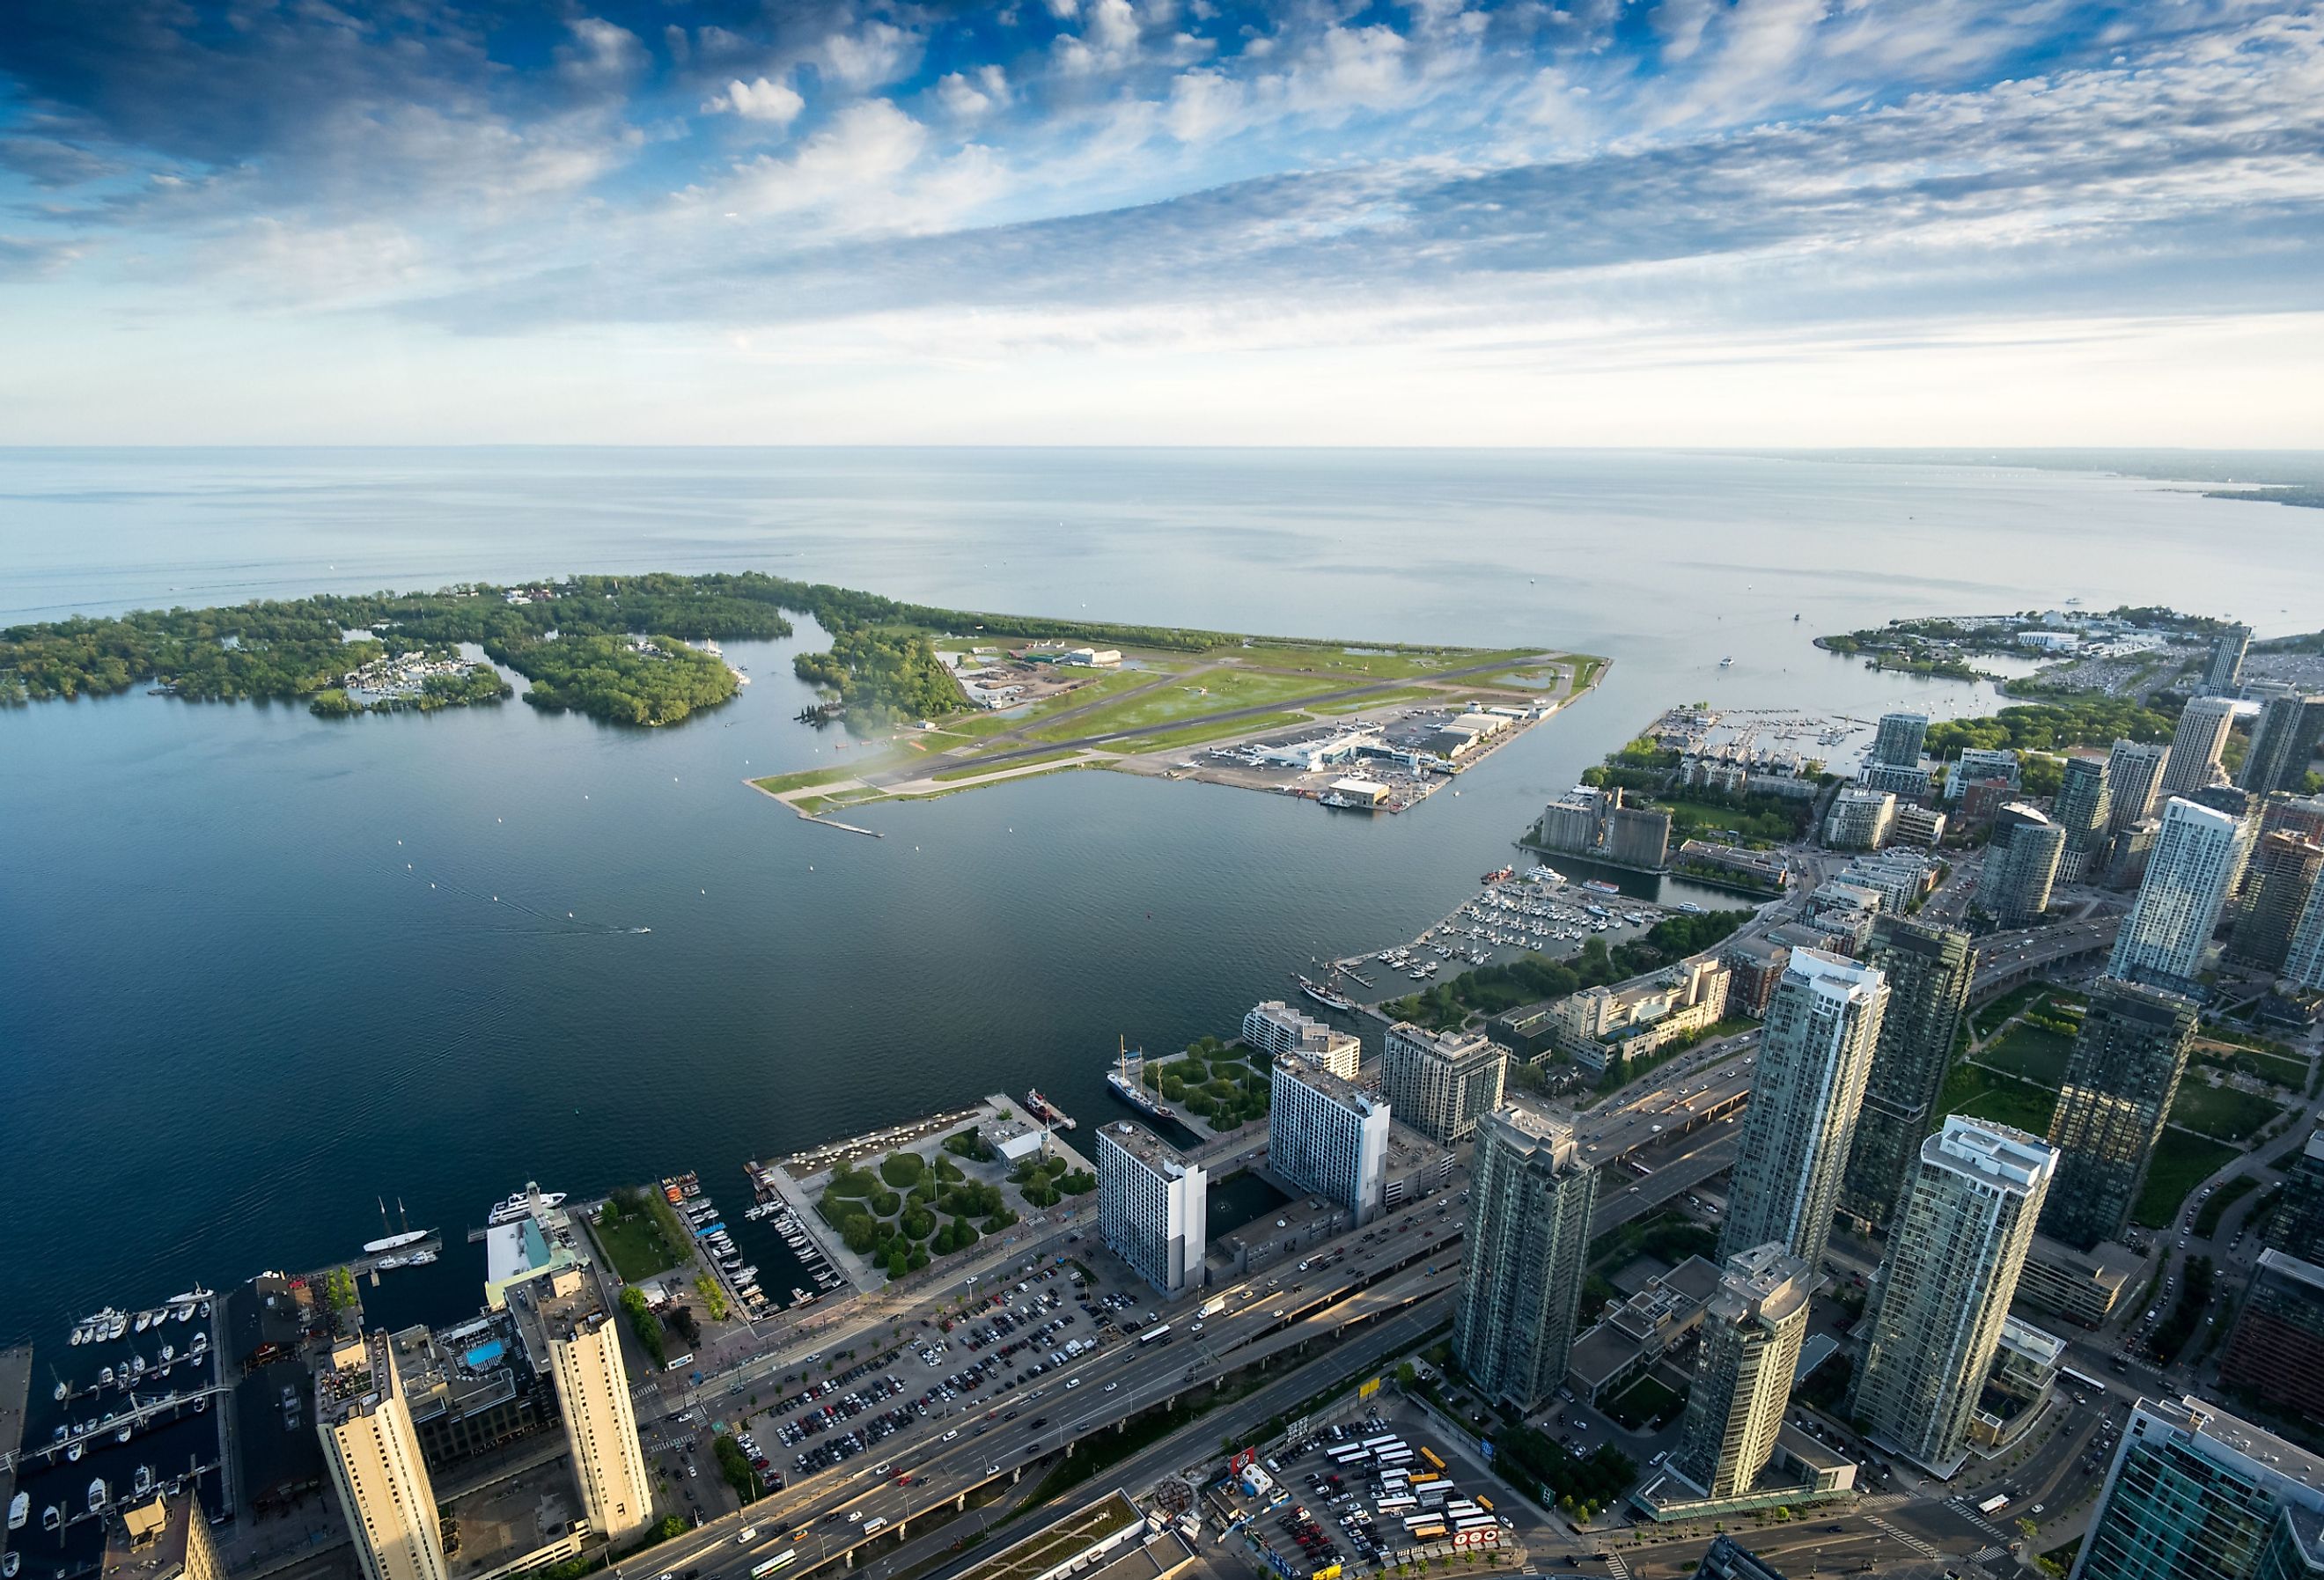 Scenic view of Toronto with Toronto Island and Lake Ontario.